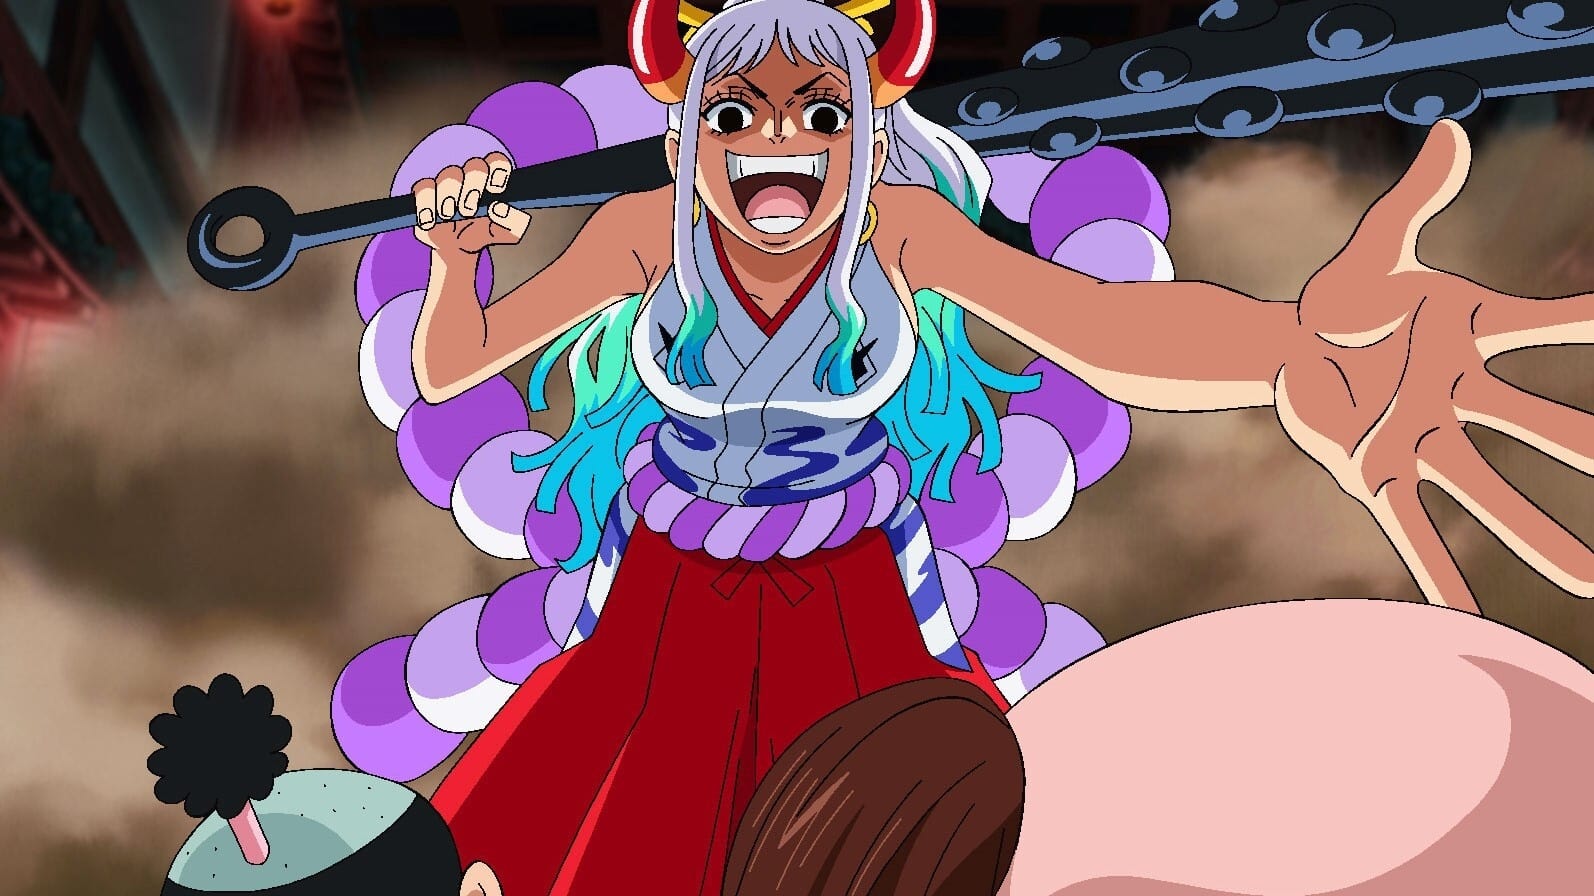 Poster del episodio 1004 de One Piece online